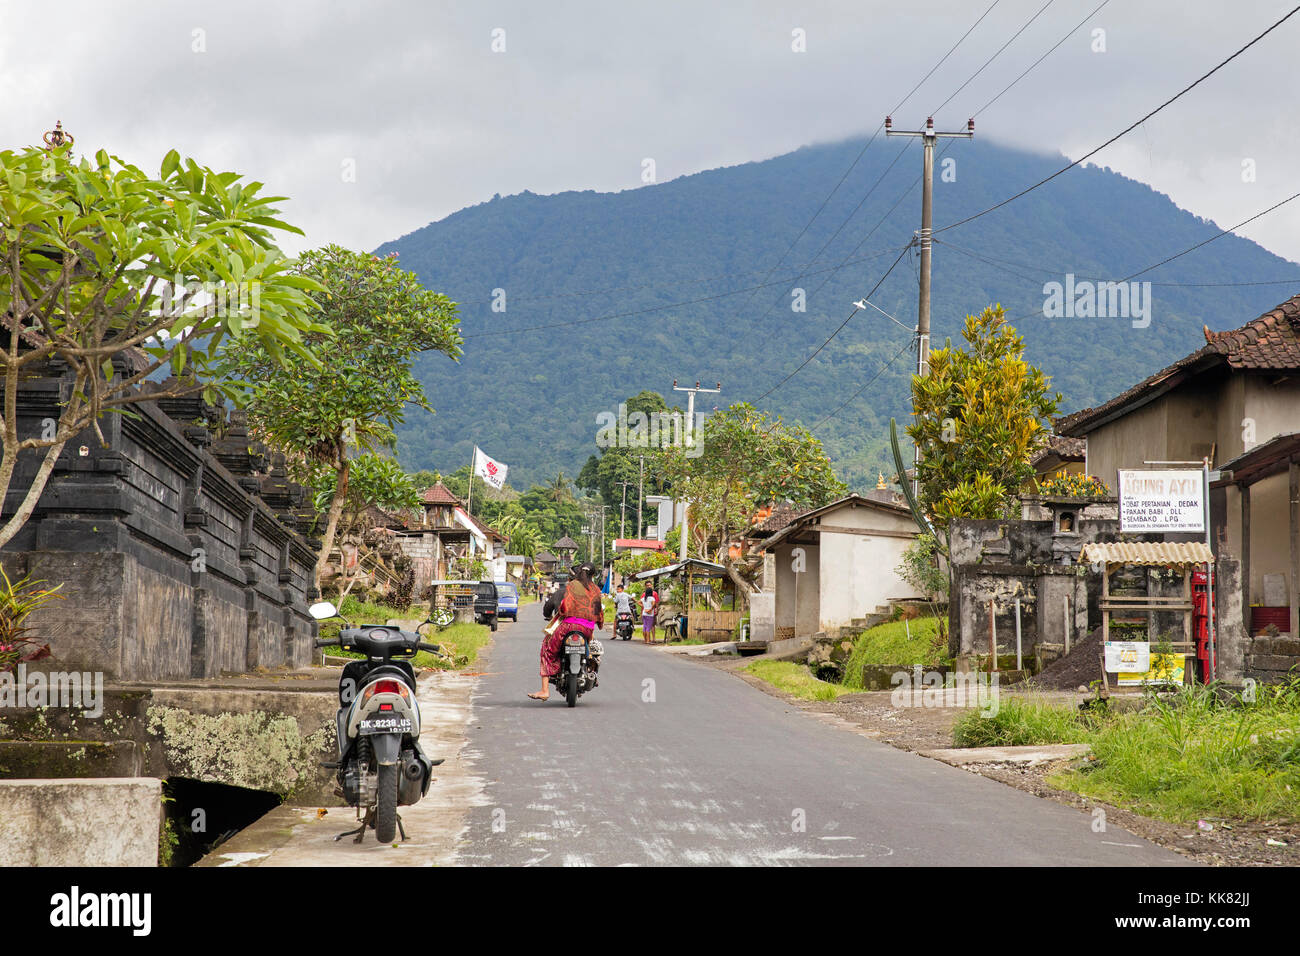 Street scene in the rural village Munduk, Buleleng regency, Bali, Indonesia Stock Photo